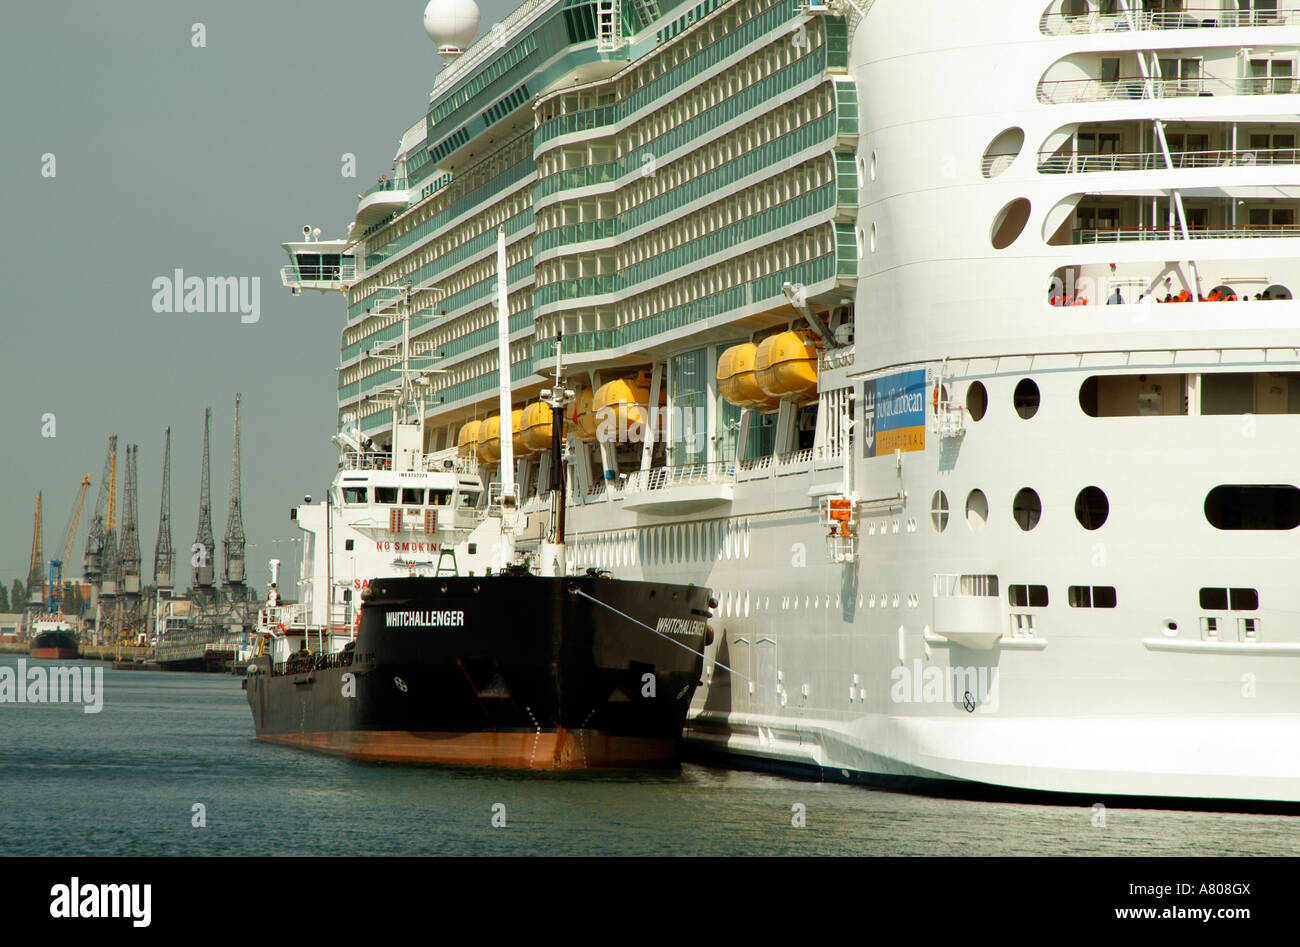 Hafen Southampton Navigator of the Seas Kreuzfahrt Schiff neben den Bunkern Schiff Whitchallenger Stockfoto